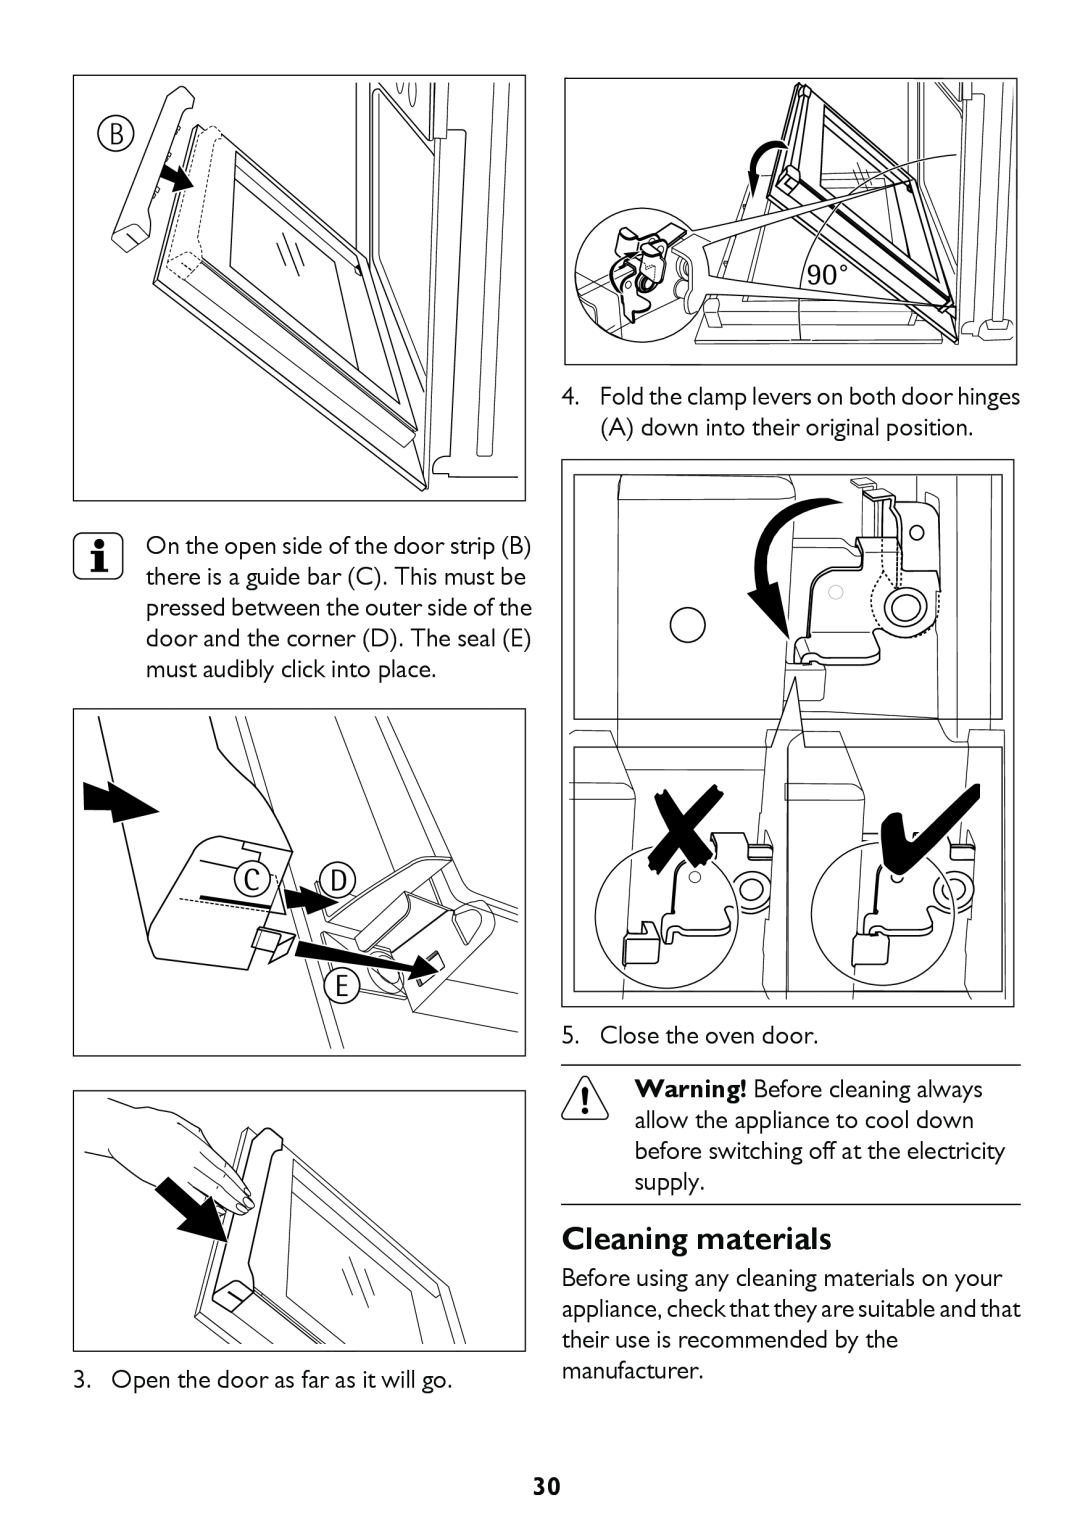 John Lewis JLBIDO913 instruction manual Cleaning materials 